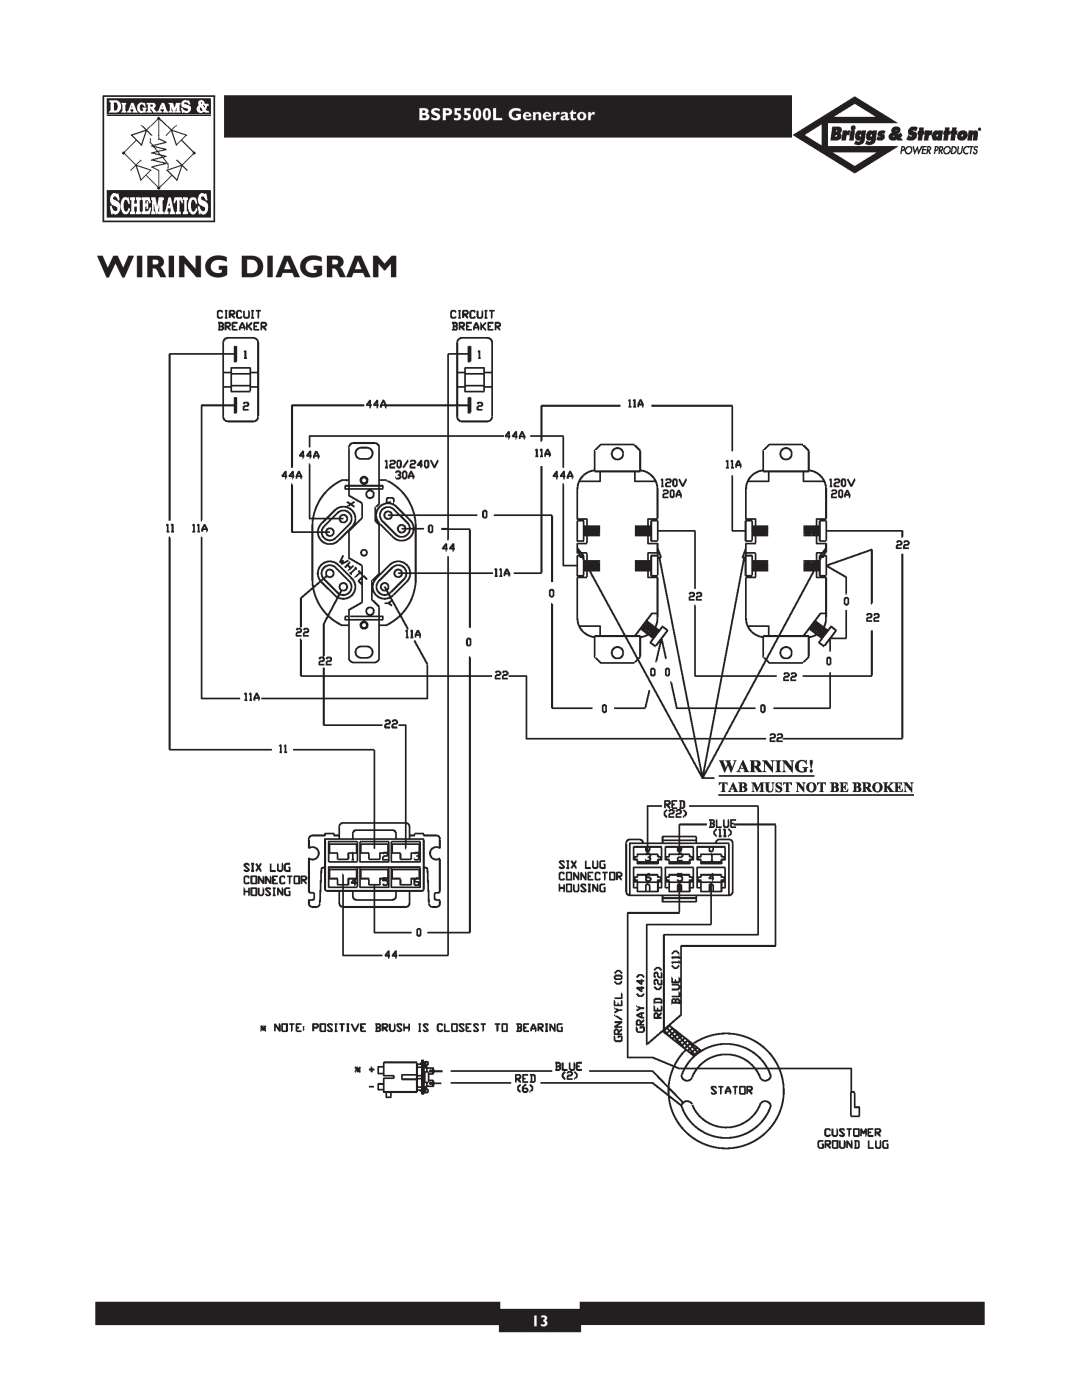 Briggs & Stratton bsp5500l owner manual Wiring Diagram, BSP5500L Generator 